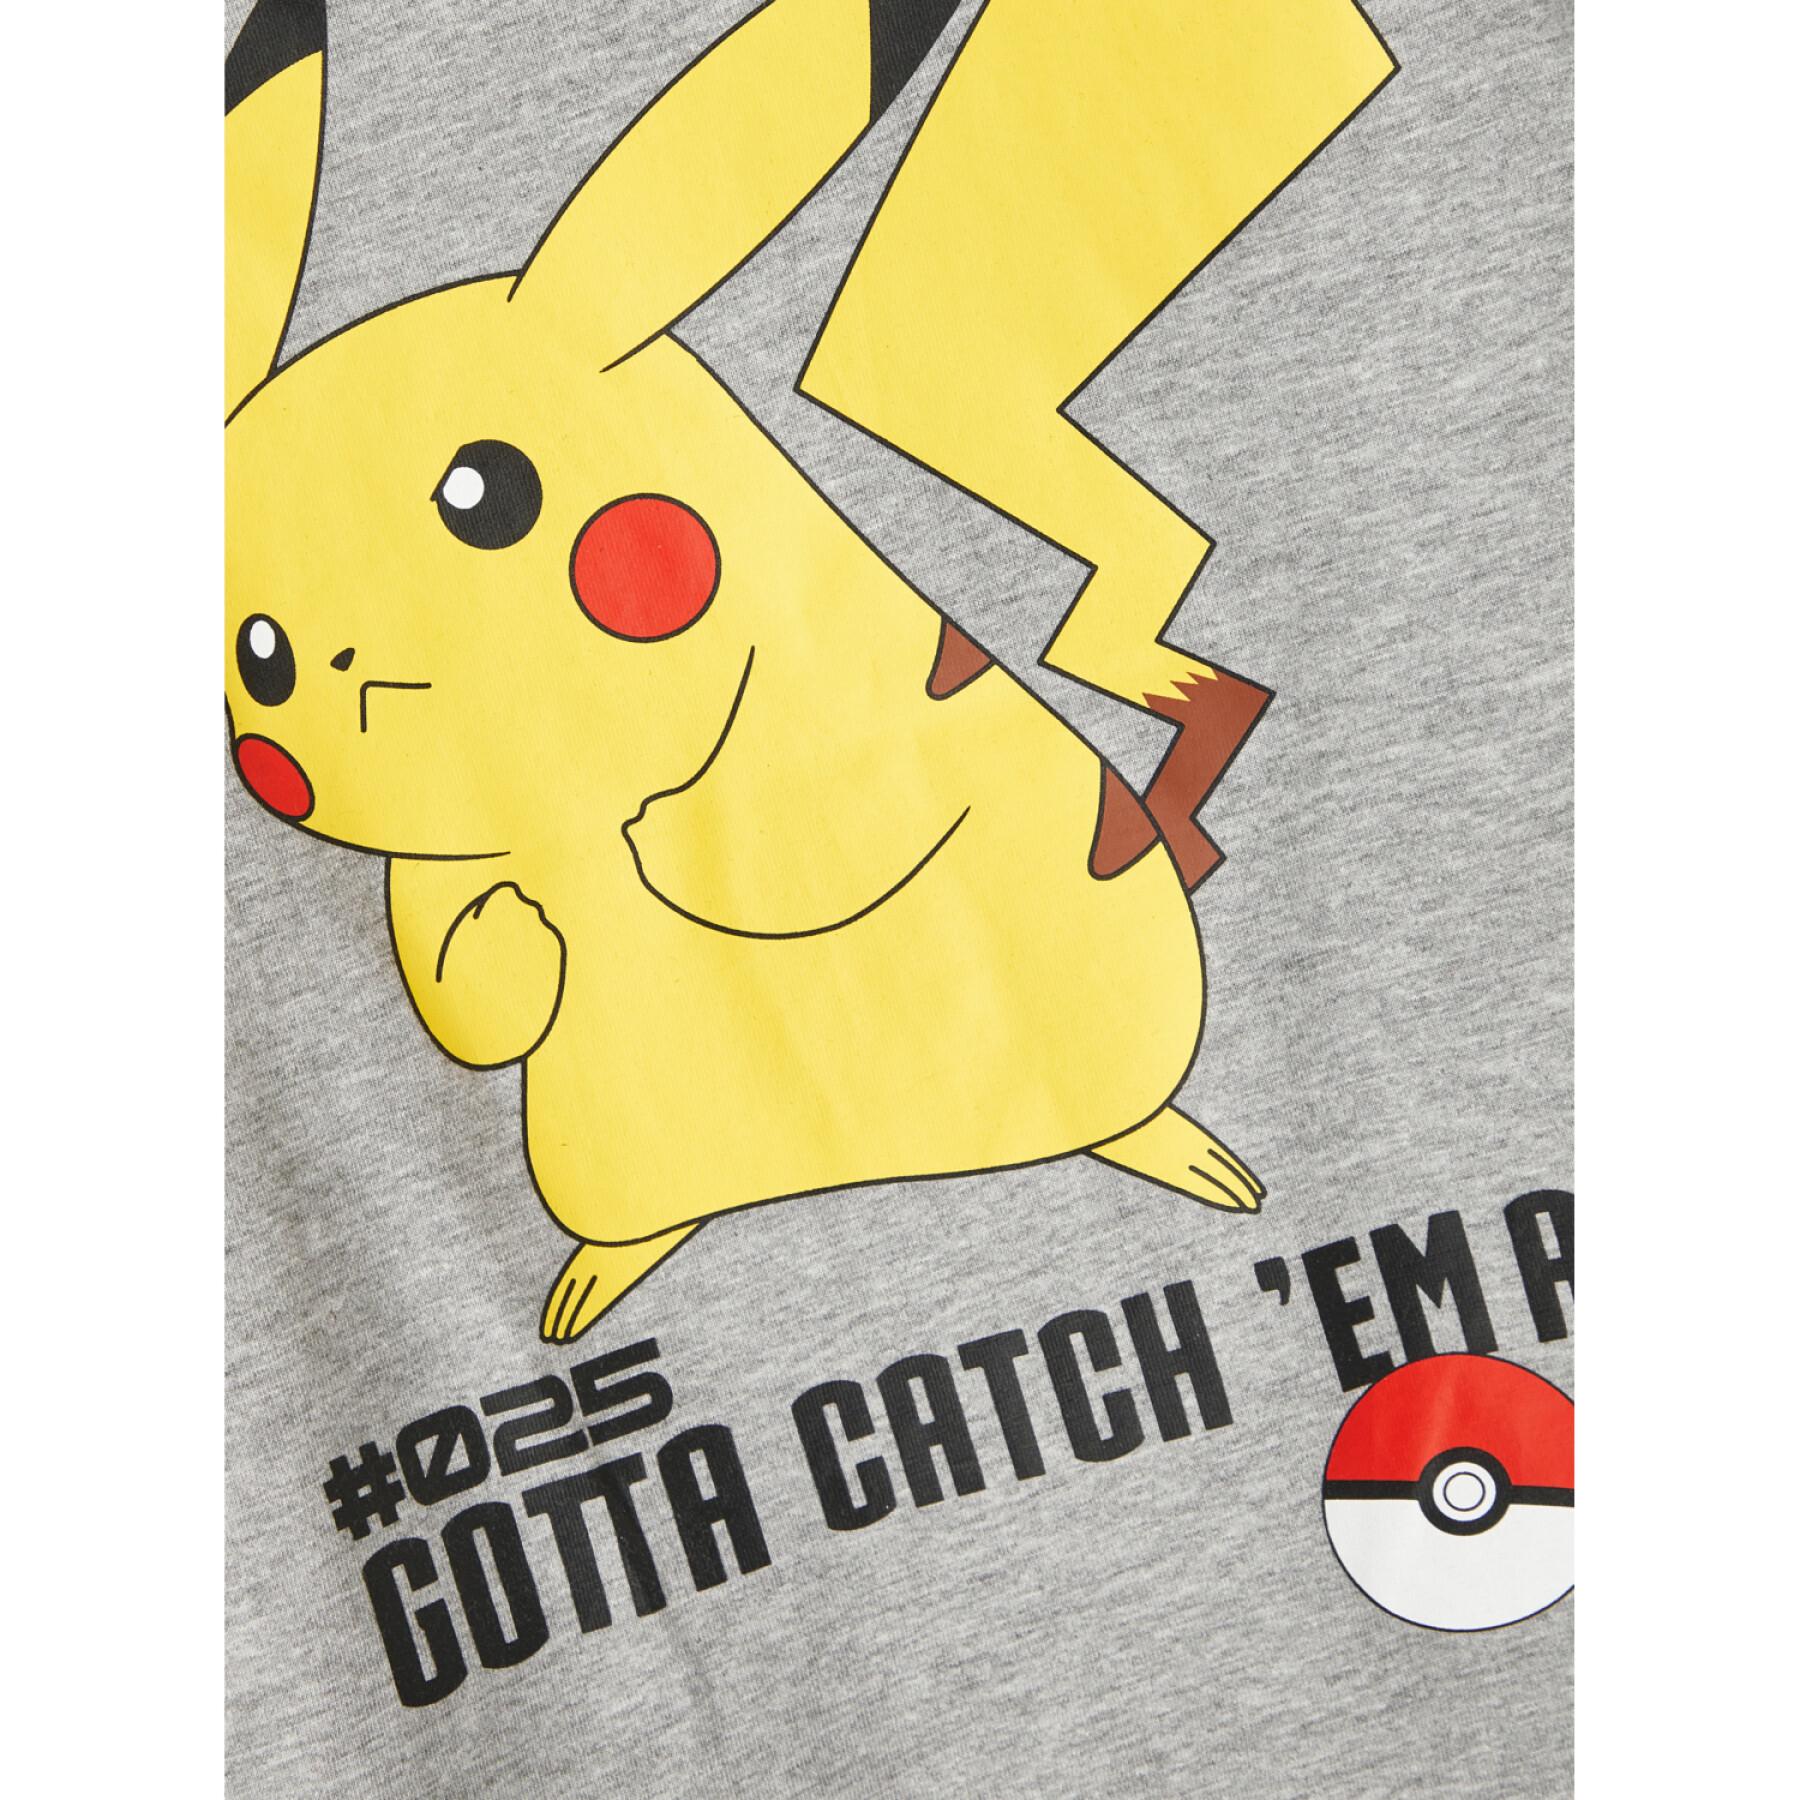 Koszulka dla dzieci Name it Nikhil Pokemon